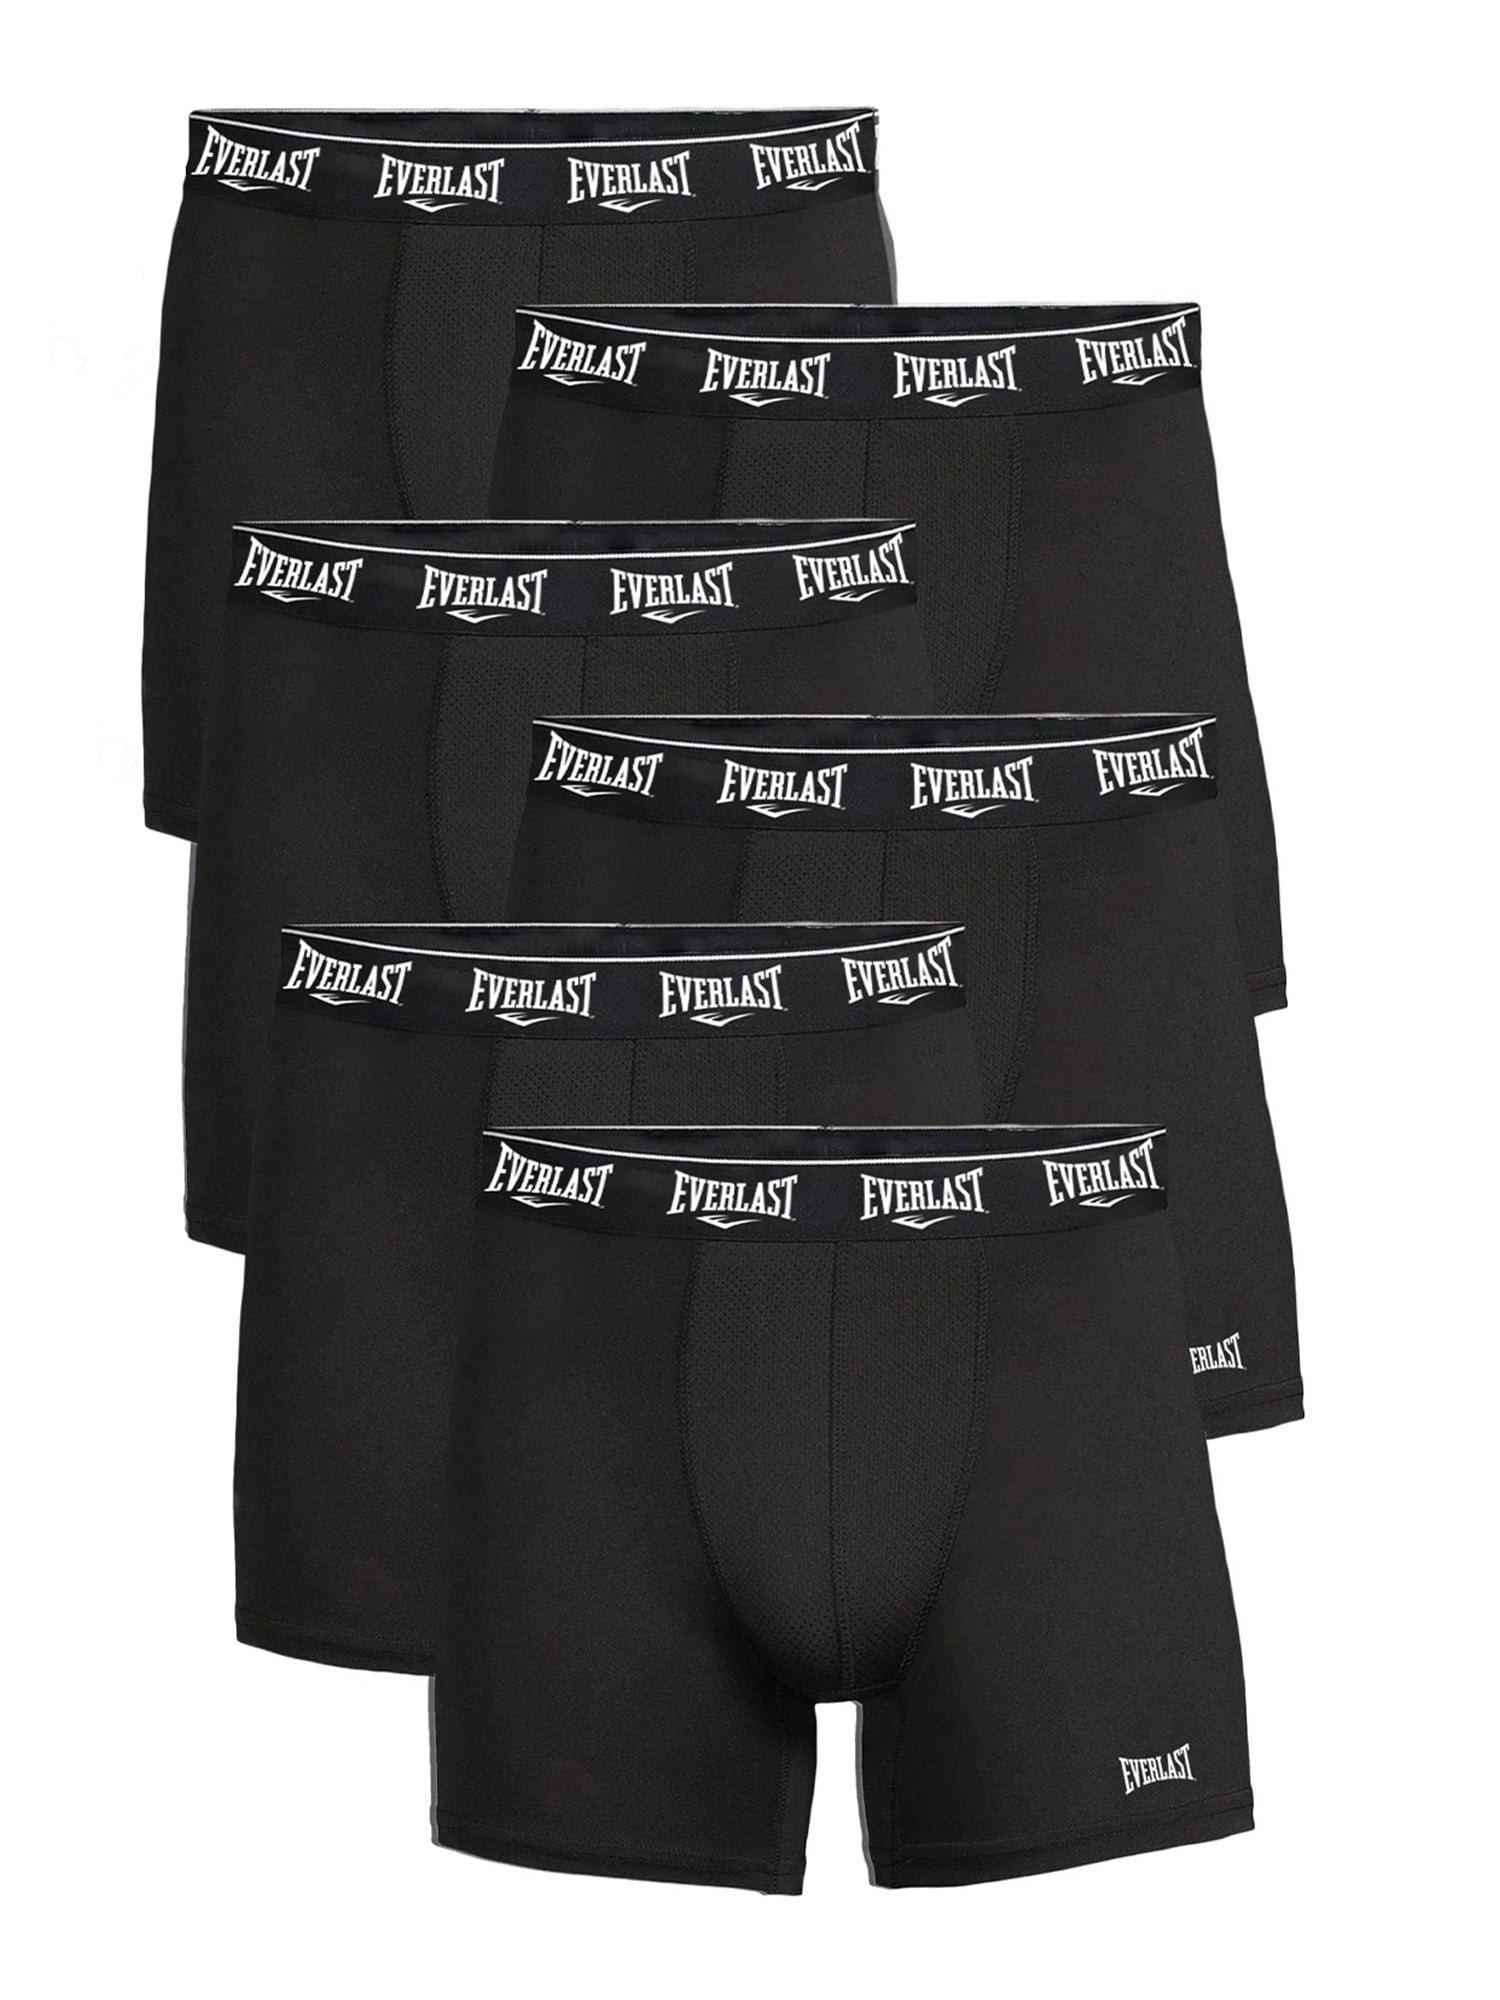 Everlast Mens Boxer Briefs Breathable Cotton Underwear Pack, Black 6-Pack